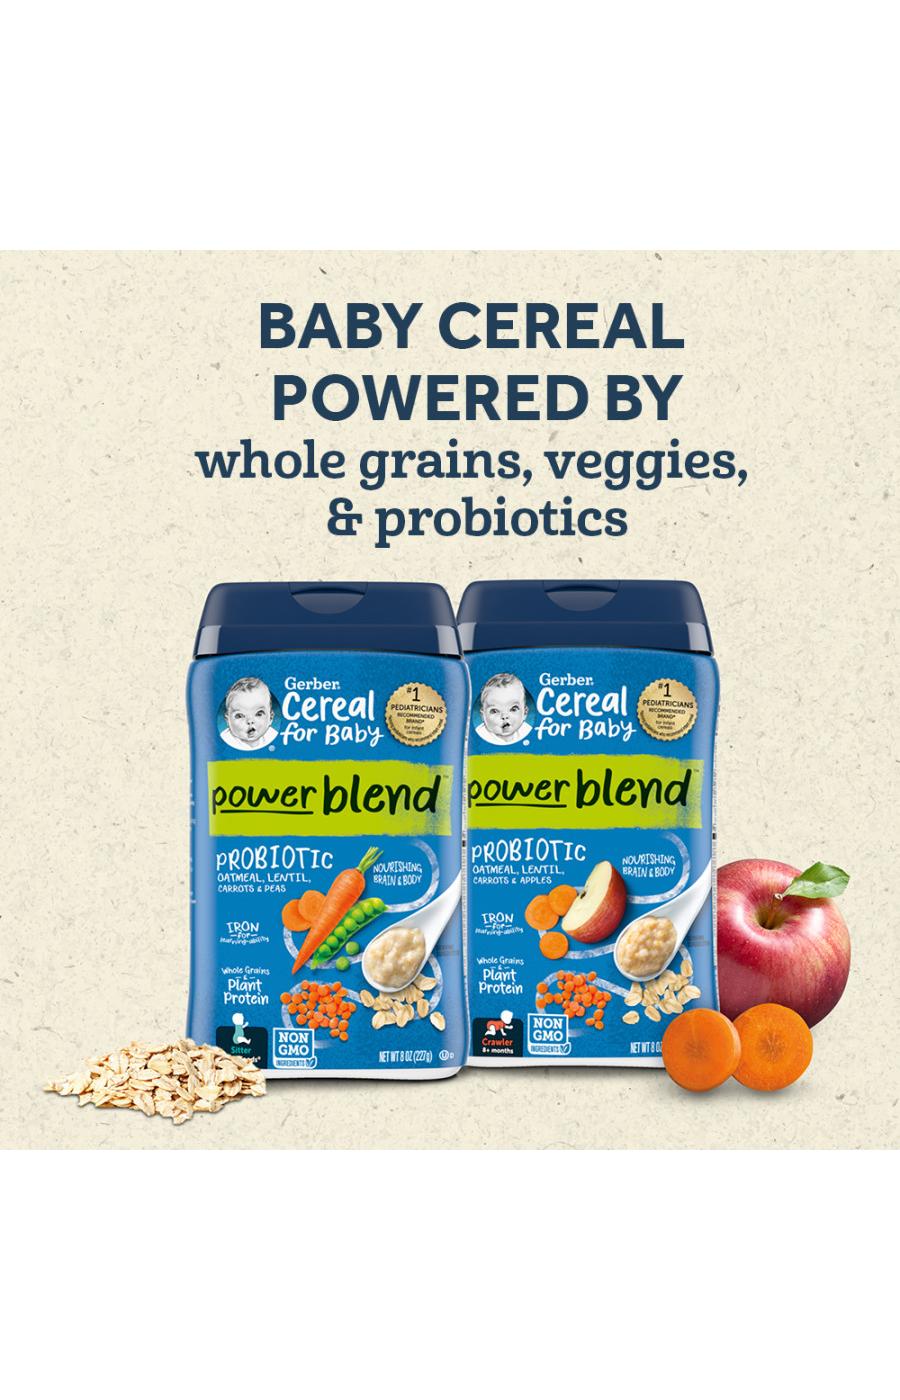 Gerber Cereal for Baby PowerBlend Probiotic - Oatmeal Lentil Carrots & Apples; image 2 of 8